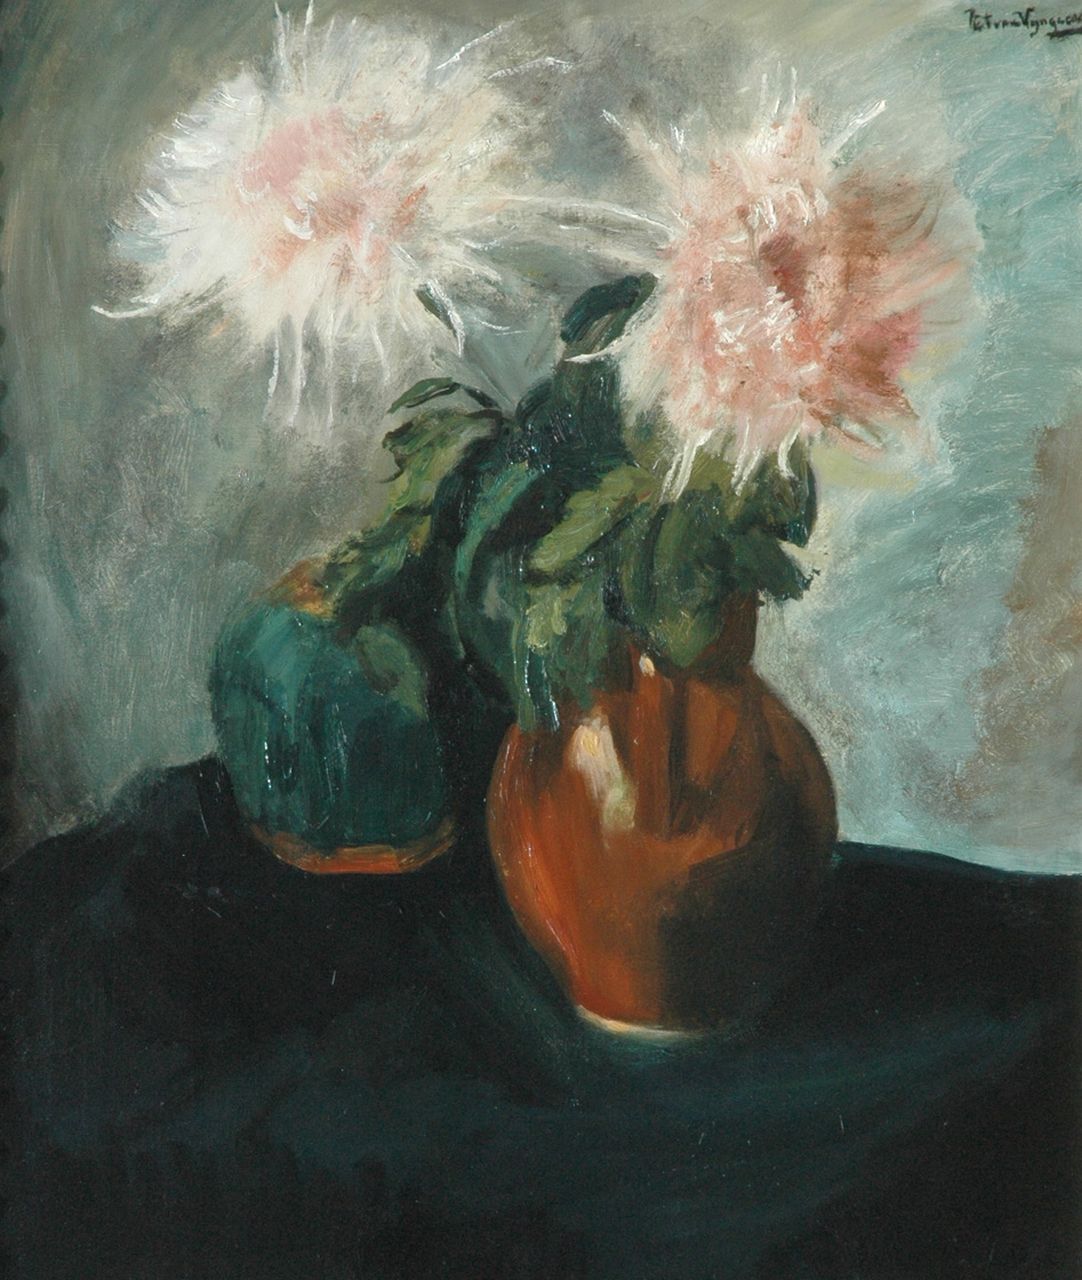 Wijngaerdt P.T. van | Petrus Theodorus 'Piet' van Wijngaerdt | Paintings offered for sale | Chrysanthemum, oil on canvas 80.0 x 68.2 cm, signed u.r.